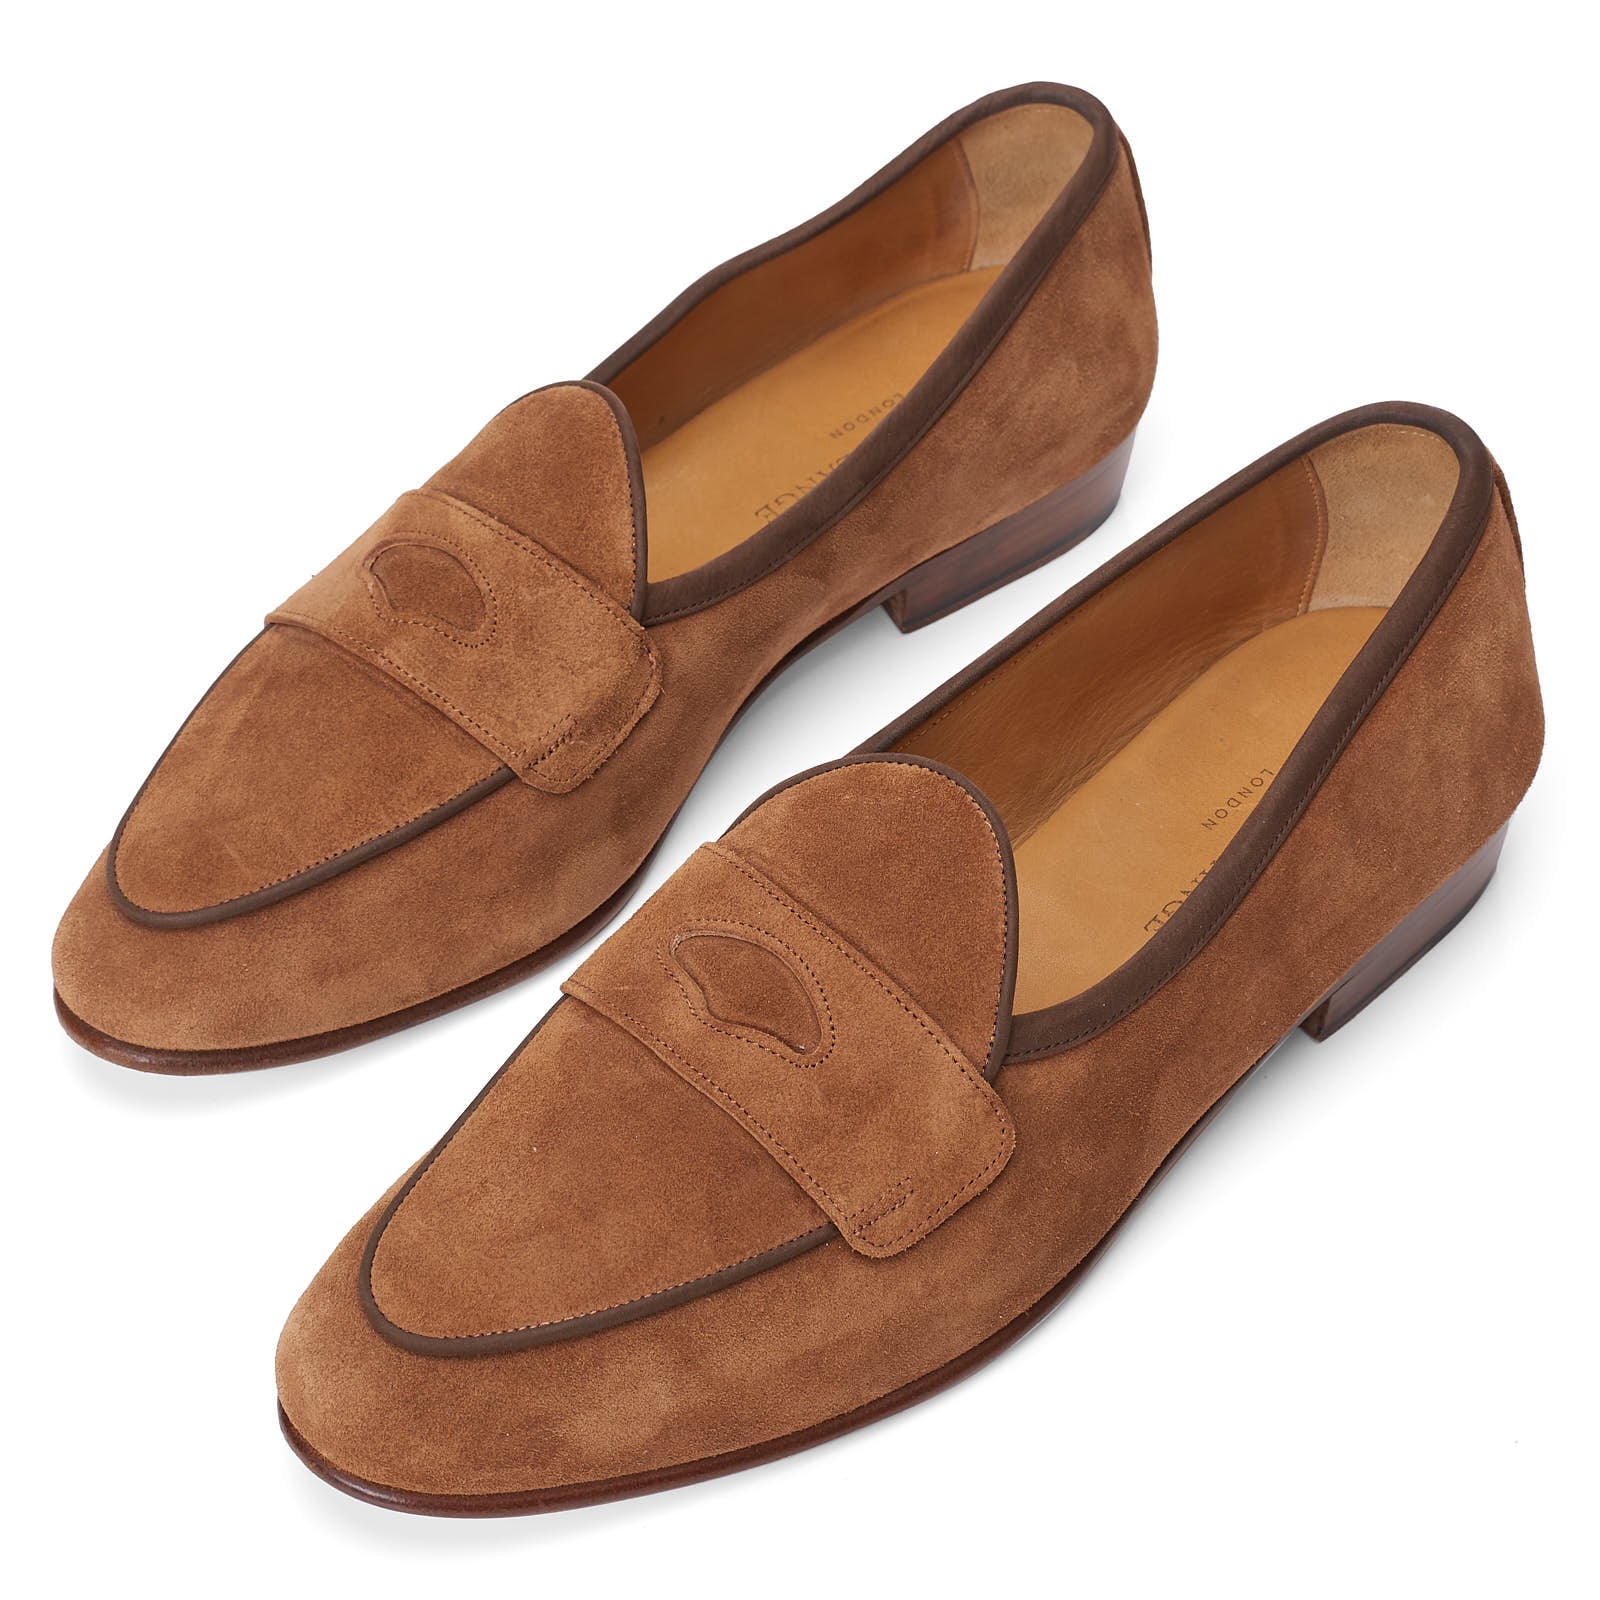 BAUDOIN & LANGE Grand Fenelon Tan Noble Suede Leather Penny Loafer Shoes EU 40 US 7